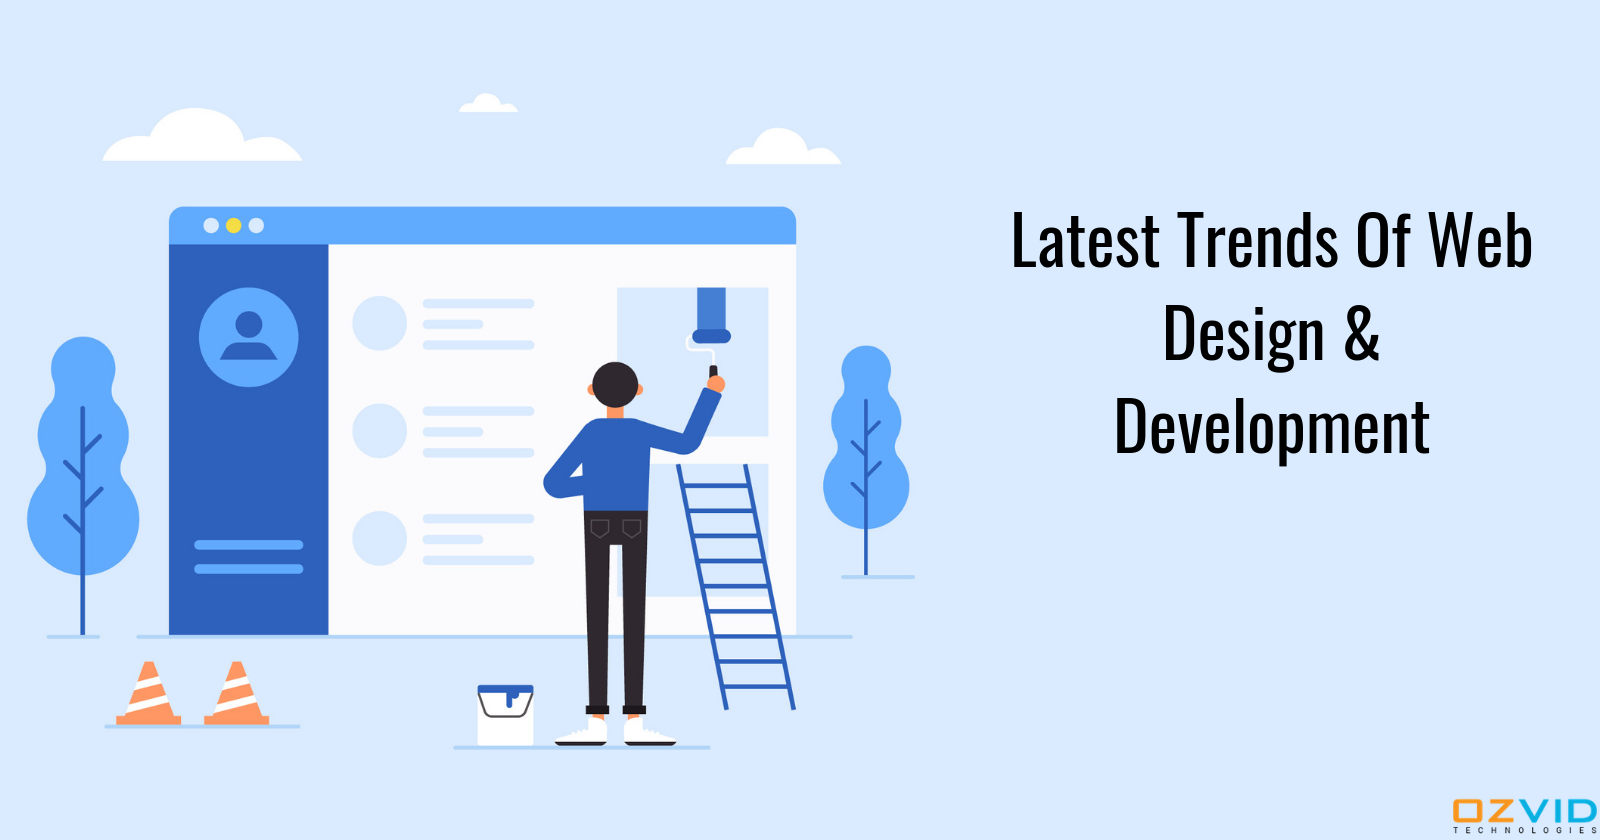 Top Website Design and Development Trends For 2019